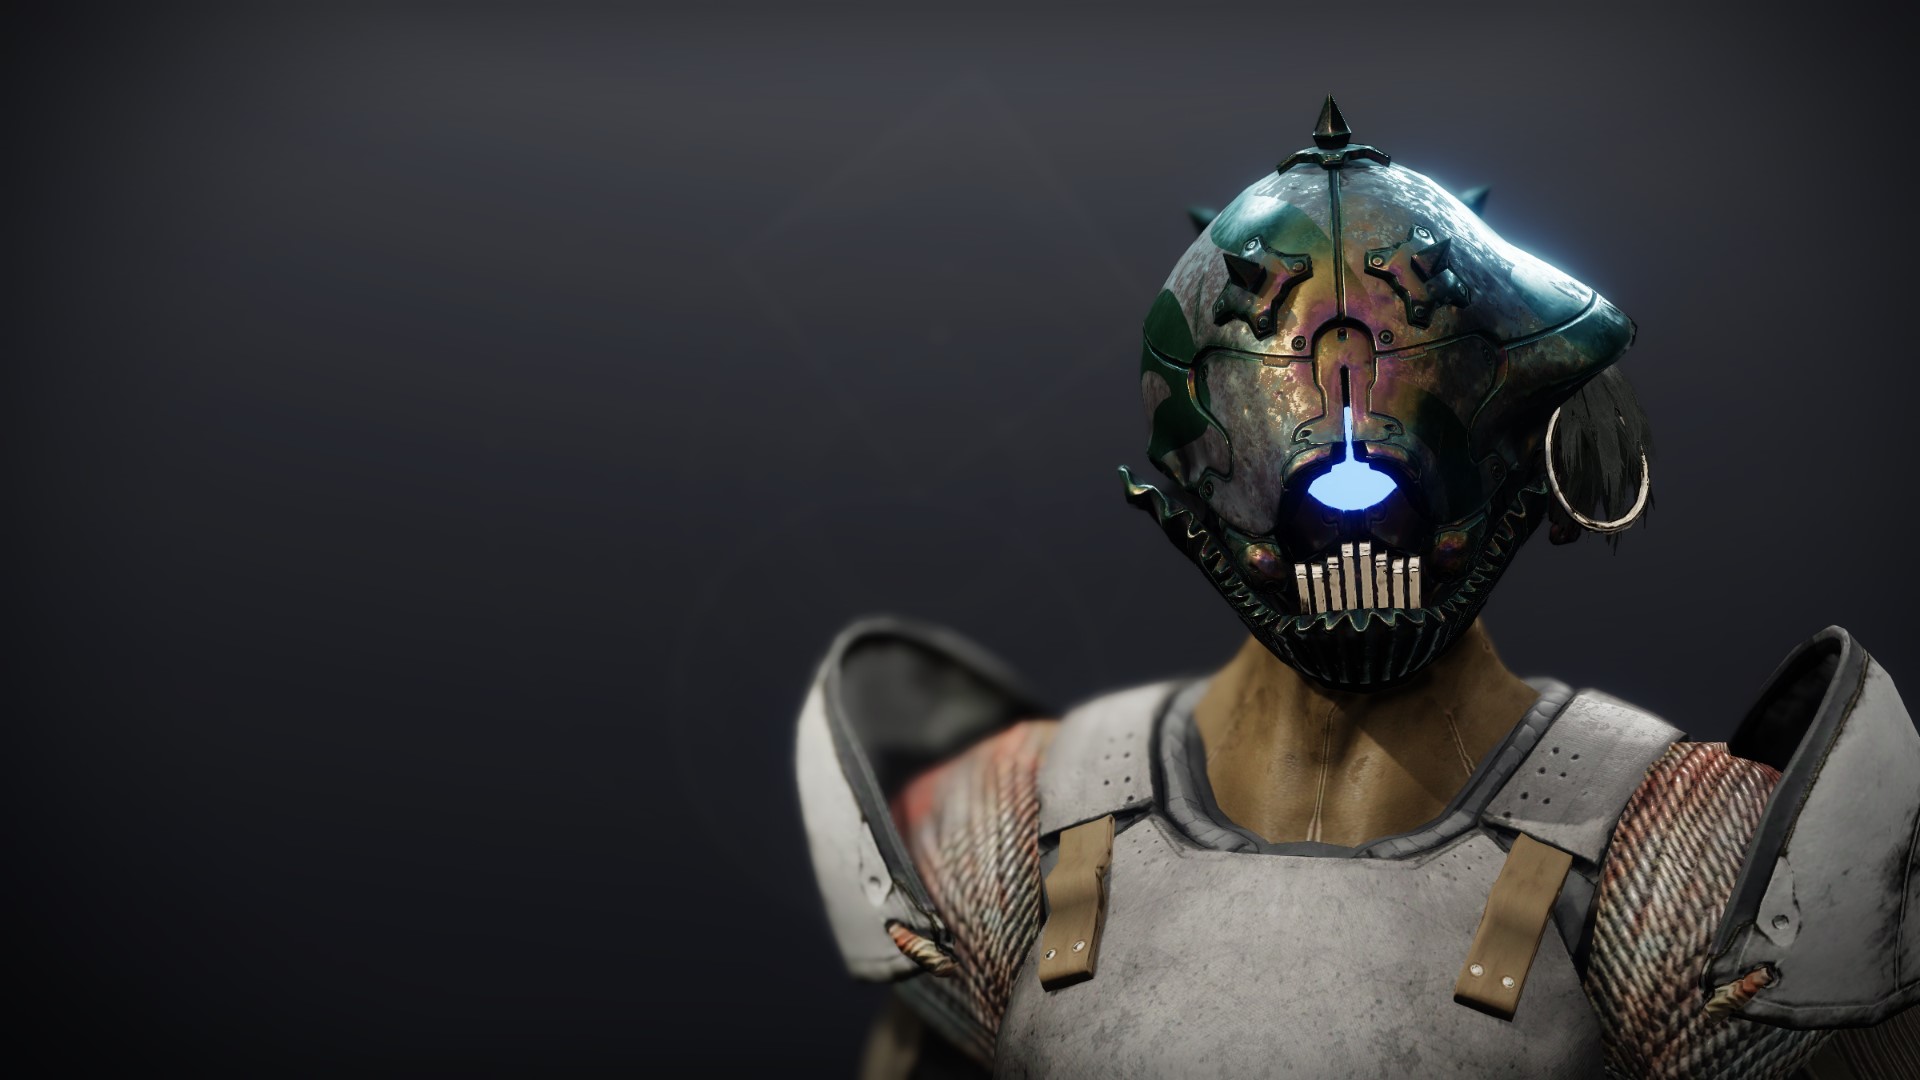 An in-game render of the Ketchkiller's Helmet.